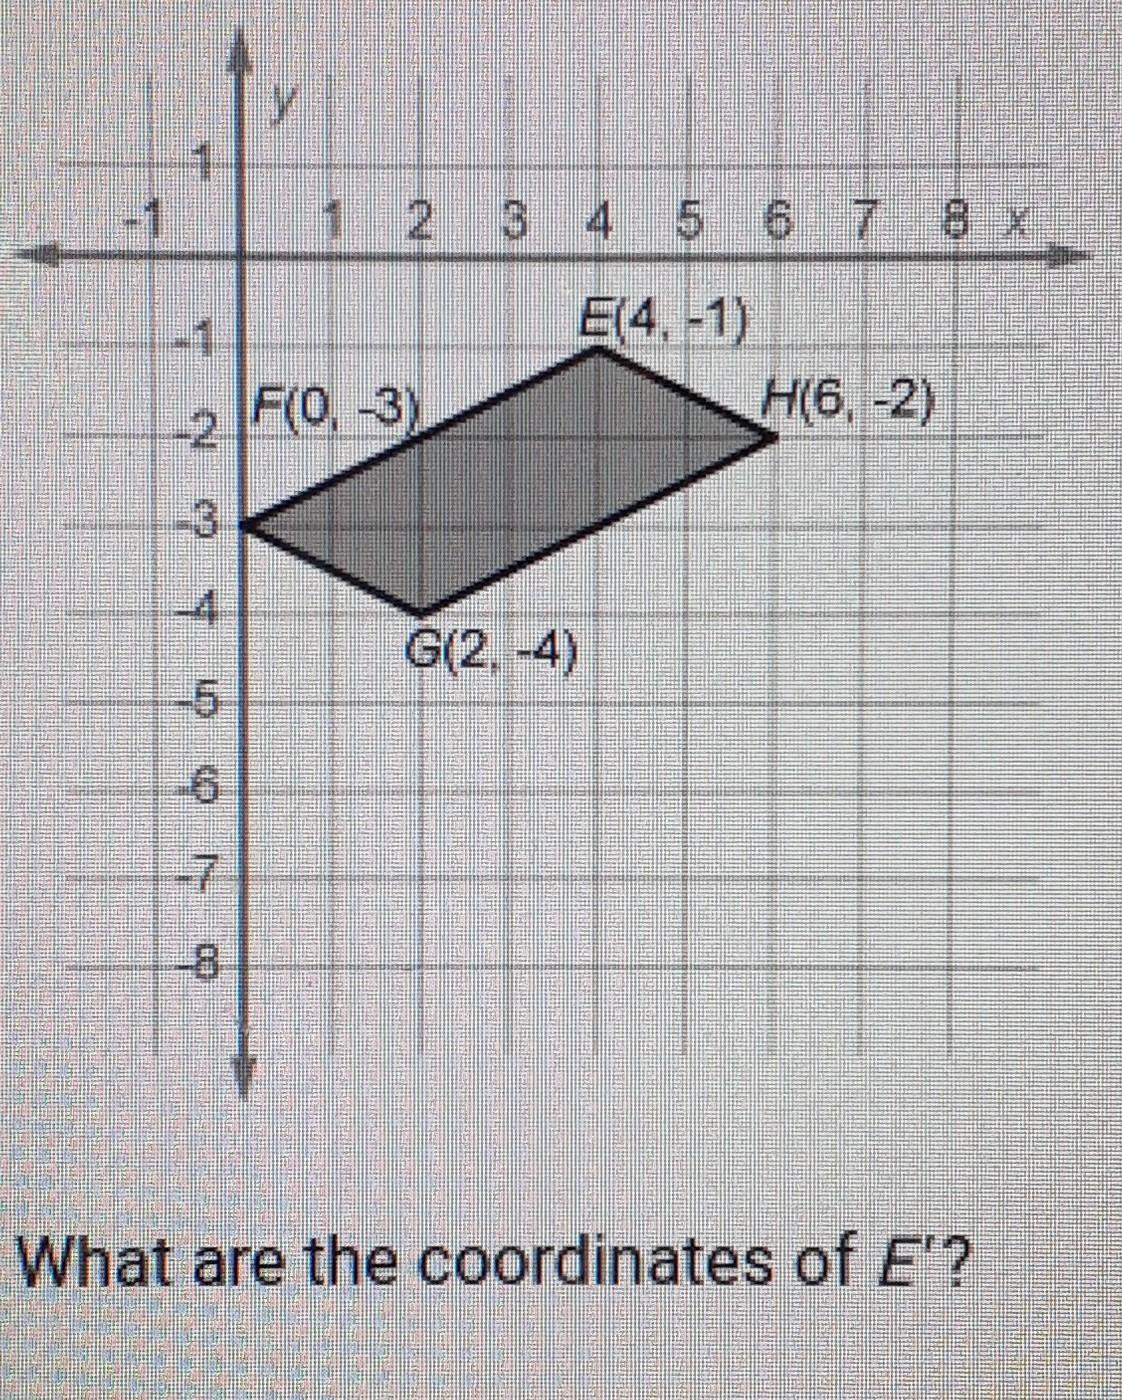 EFGH Is Translate 5 Units To The Left And 2 Units Up.A. E(-1,-3)B. E(6,-6)C. E (-1,1)D. E(9,-3)